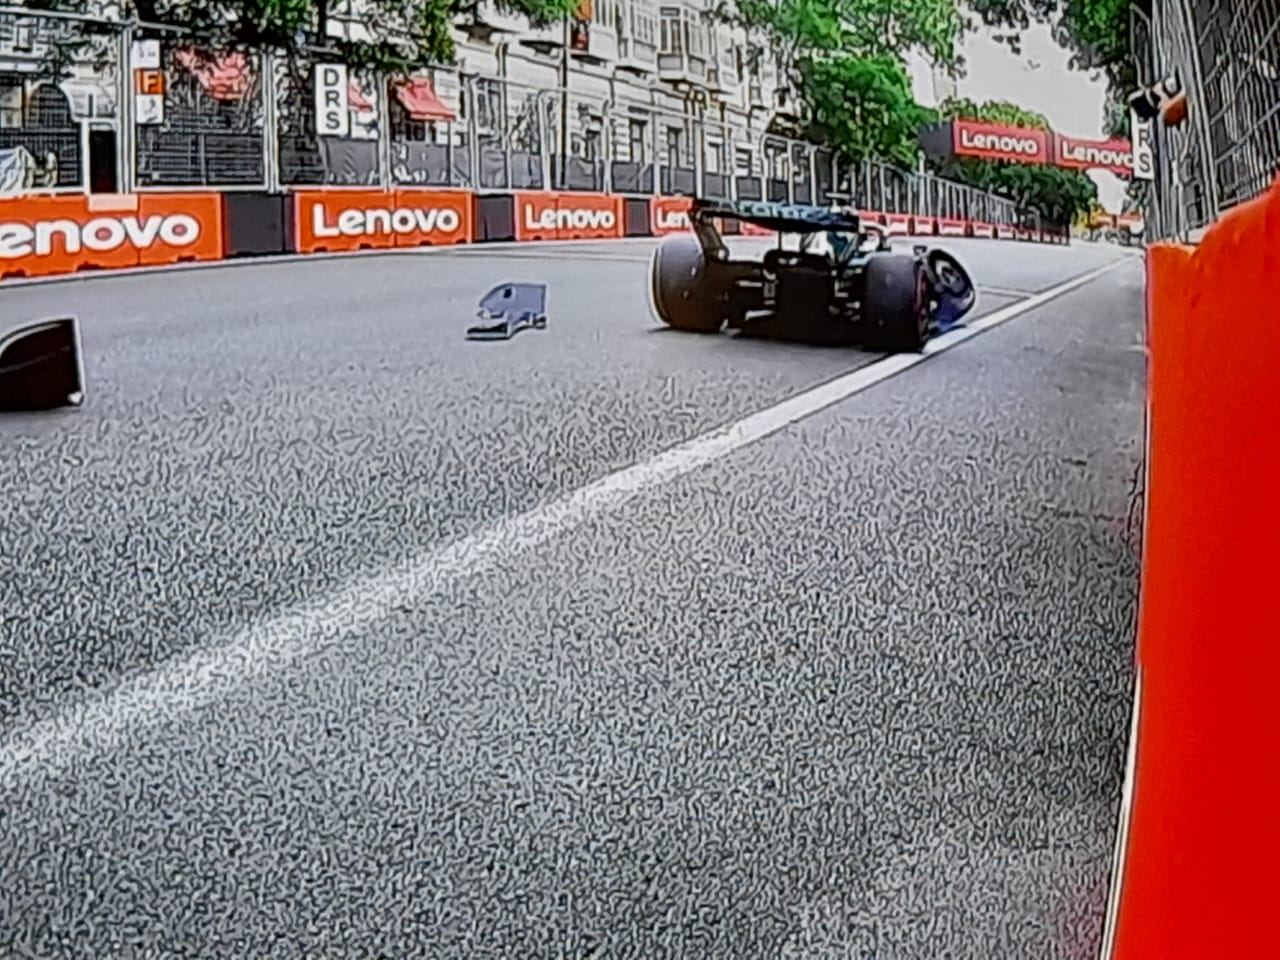 F-1 Qualifying Session of Azerbaijan Grand Prix records first crash (PHOTO)